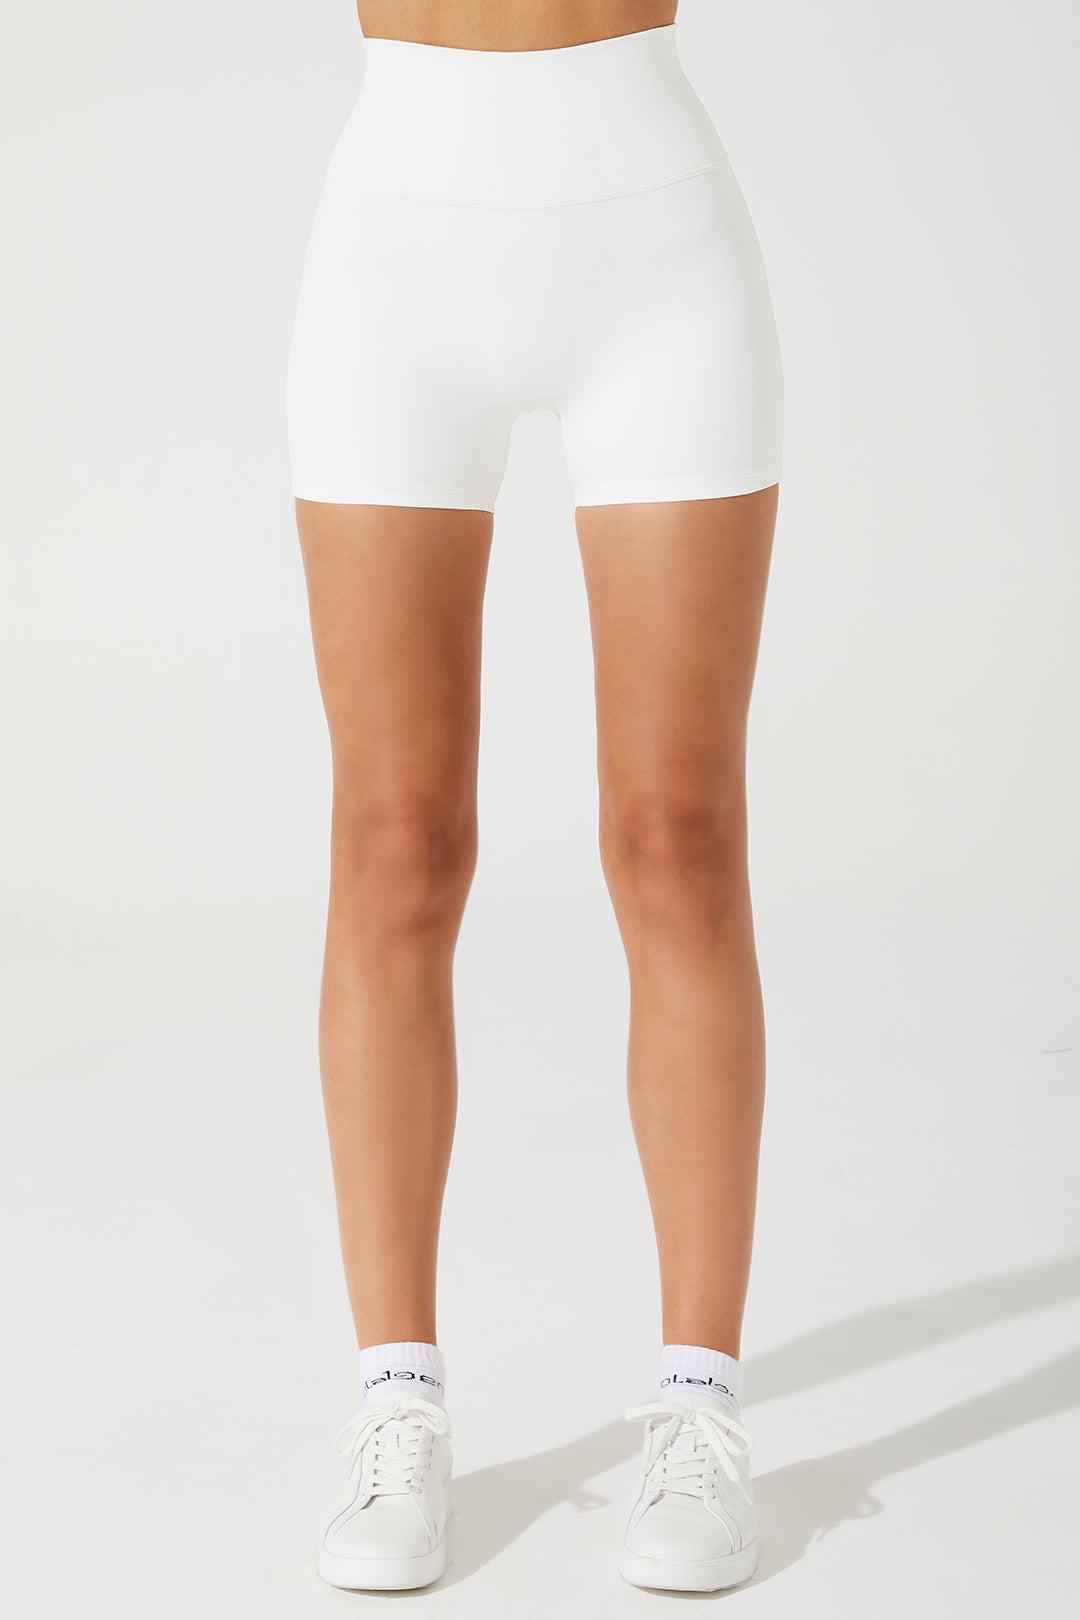 White women's biker shorts with Elvi branding, style OW-0038, in size 2.